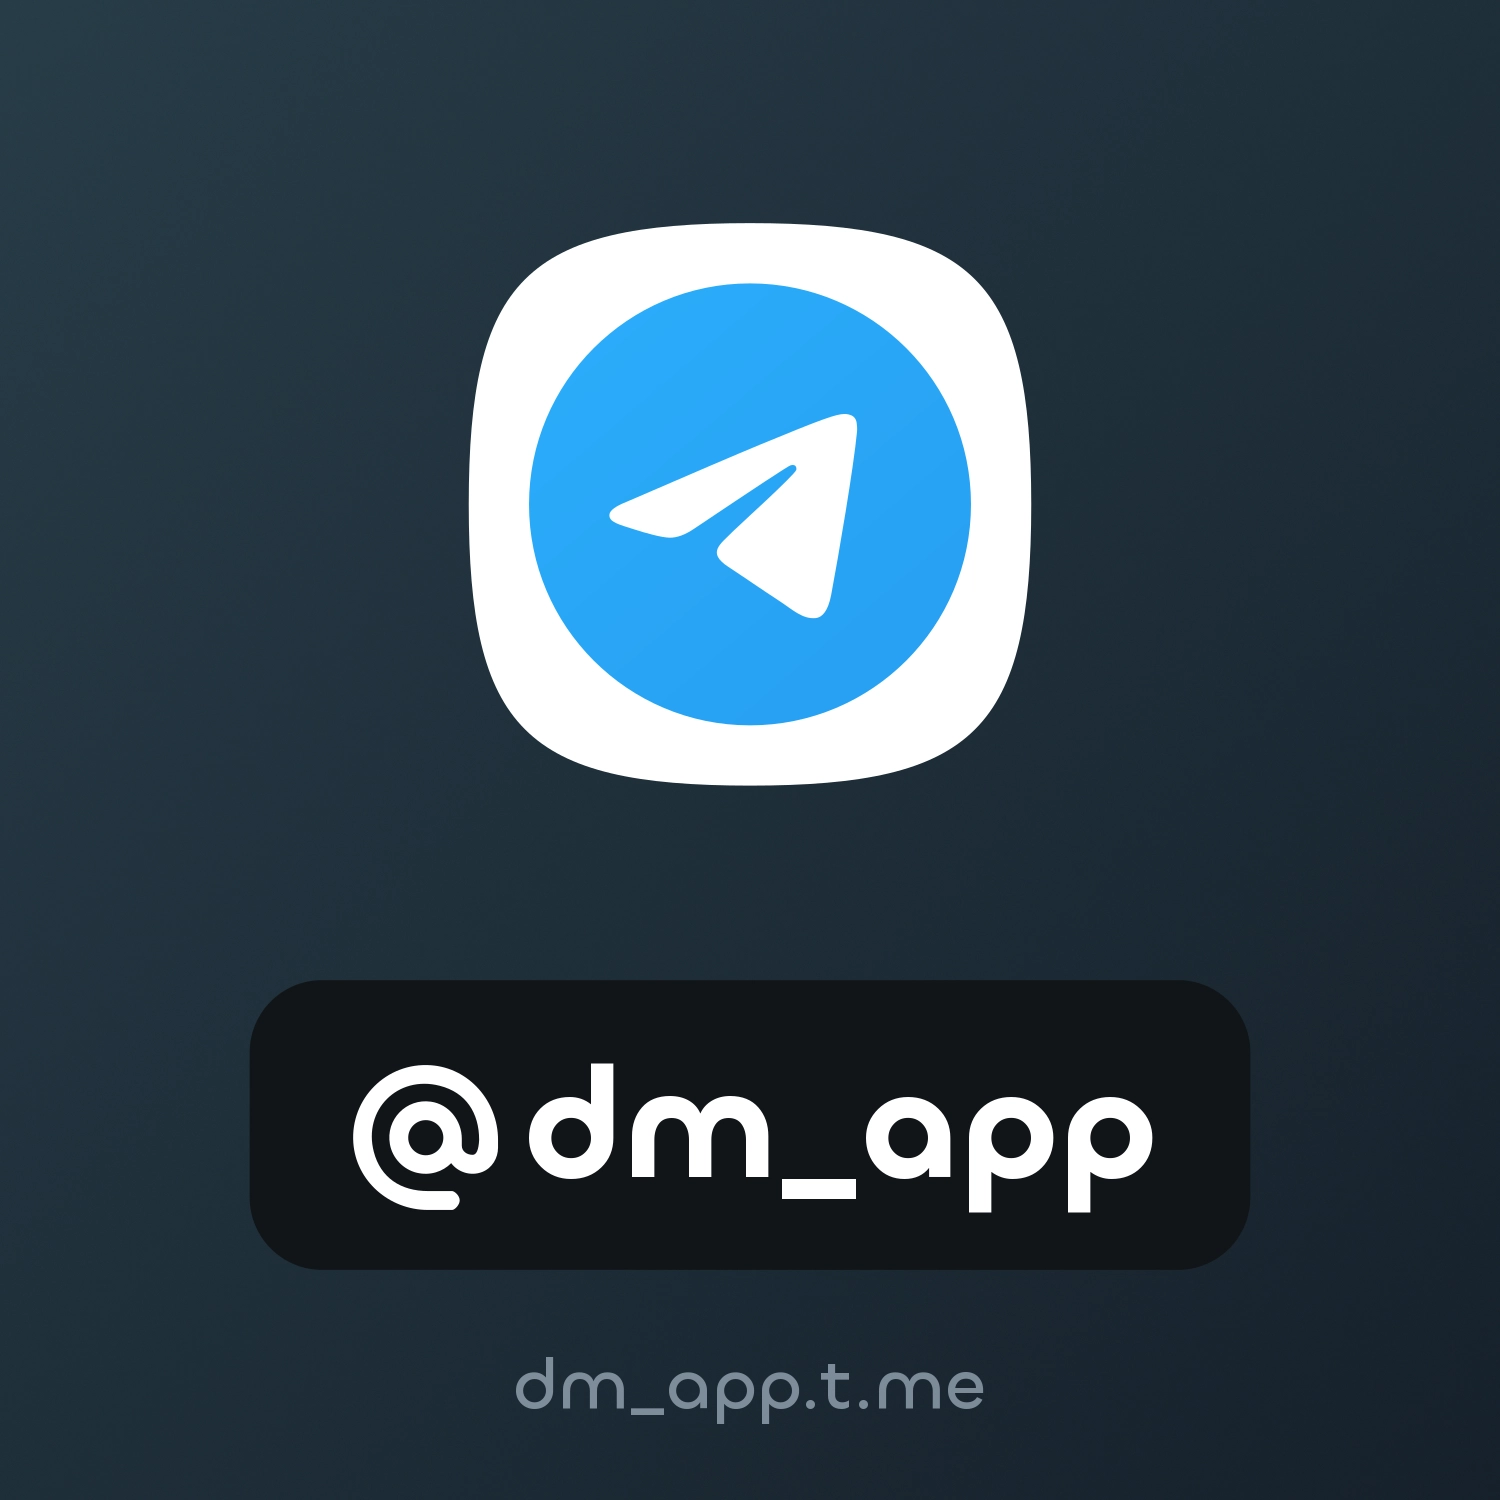 @dm_app